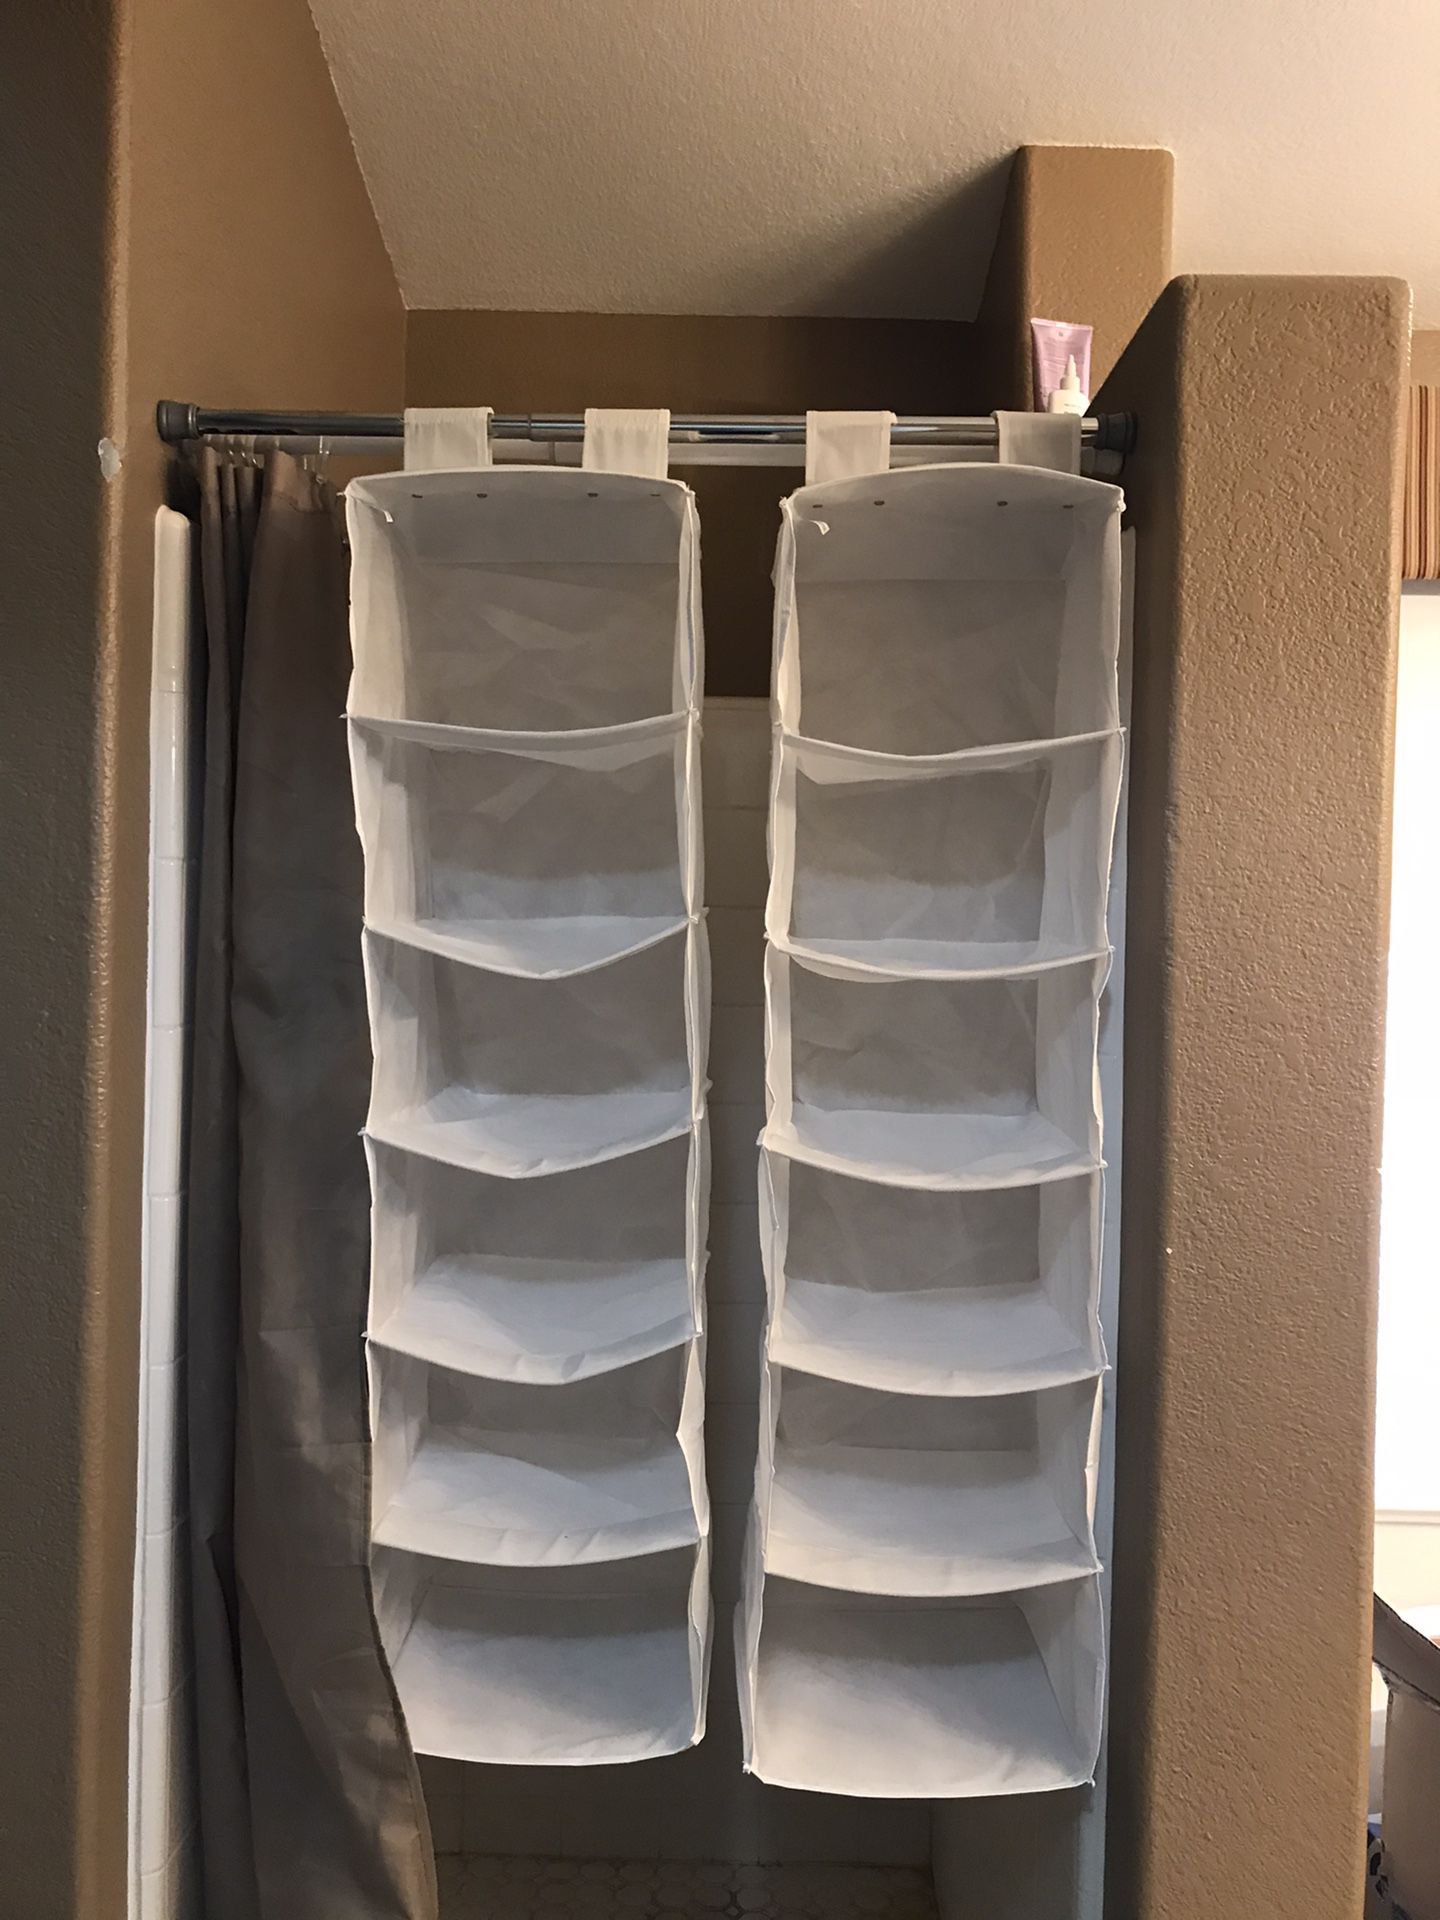 Hanging closet organizer shelves